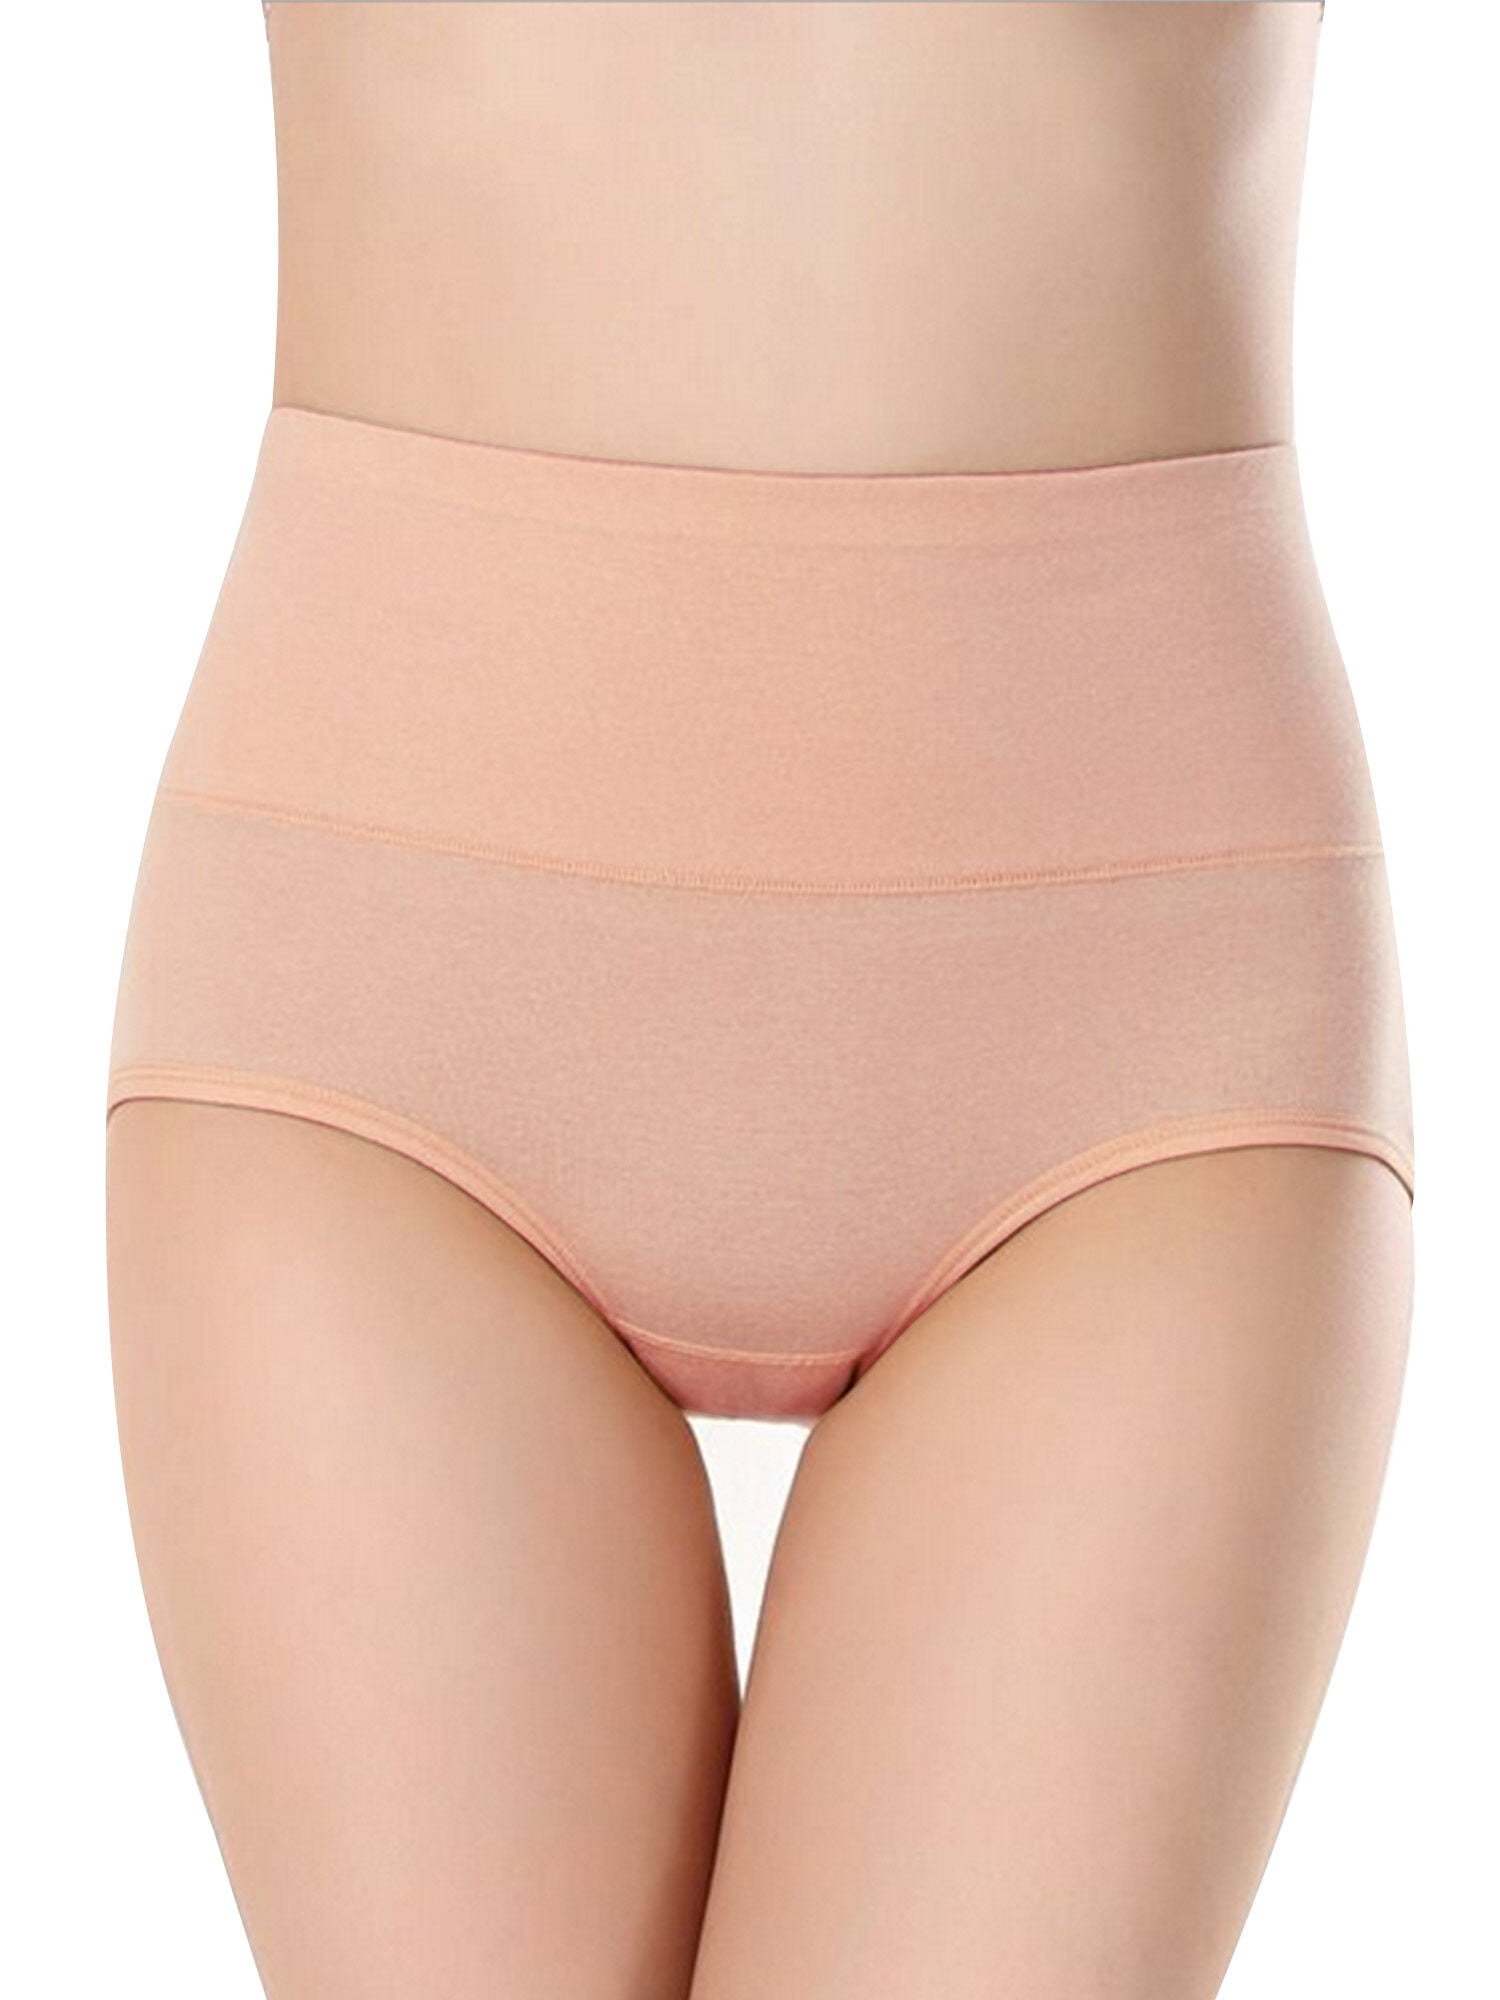 3pcs Pregnant Women's Modal Seamless Threaded Cotton Underwear For Girls  Nude Silk Smooth Large Waist Triangular Pants For Women - AliExpress